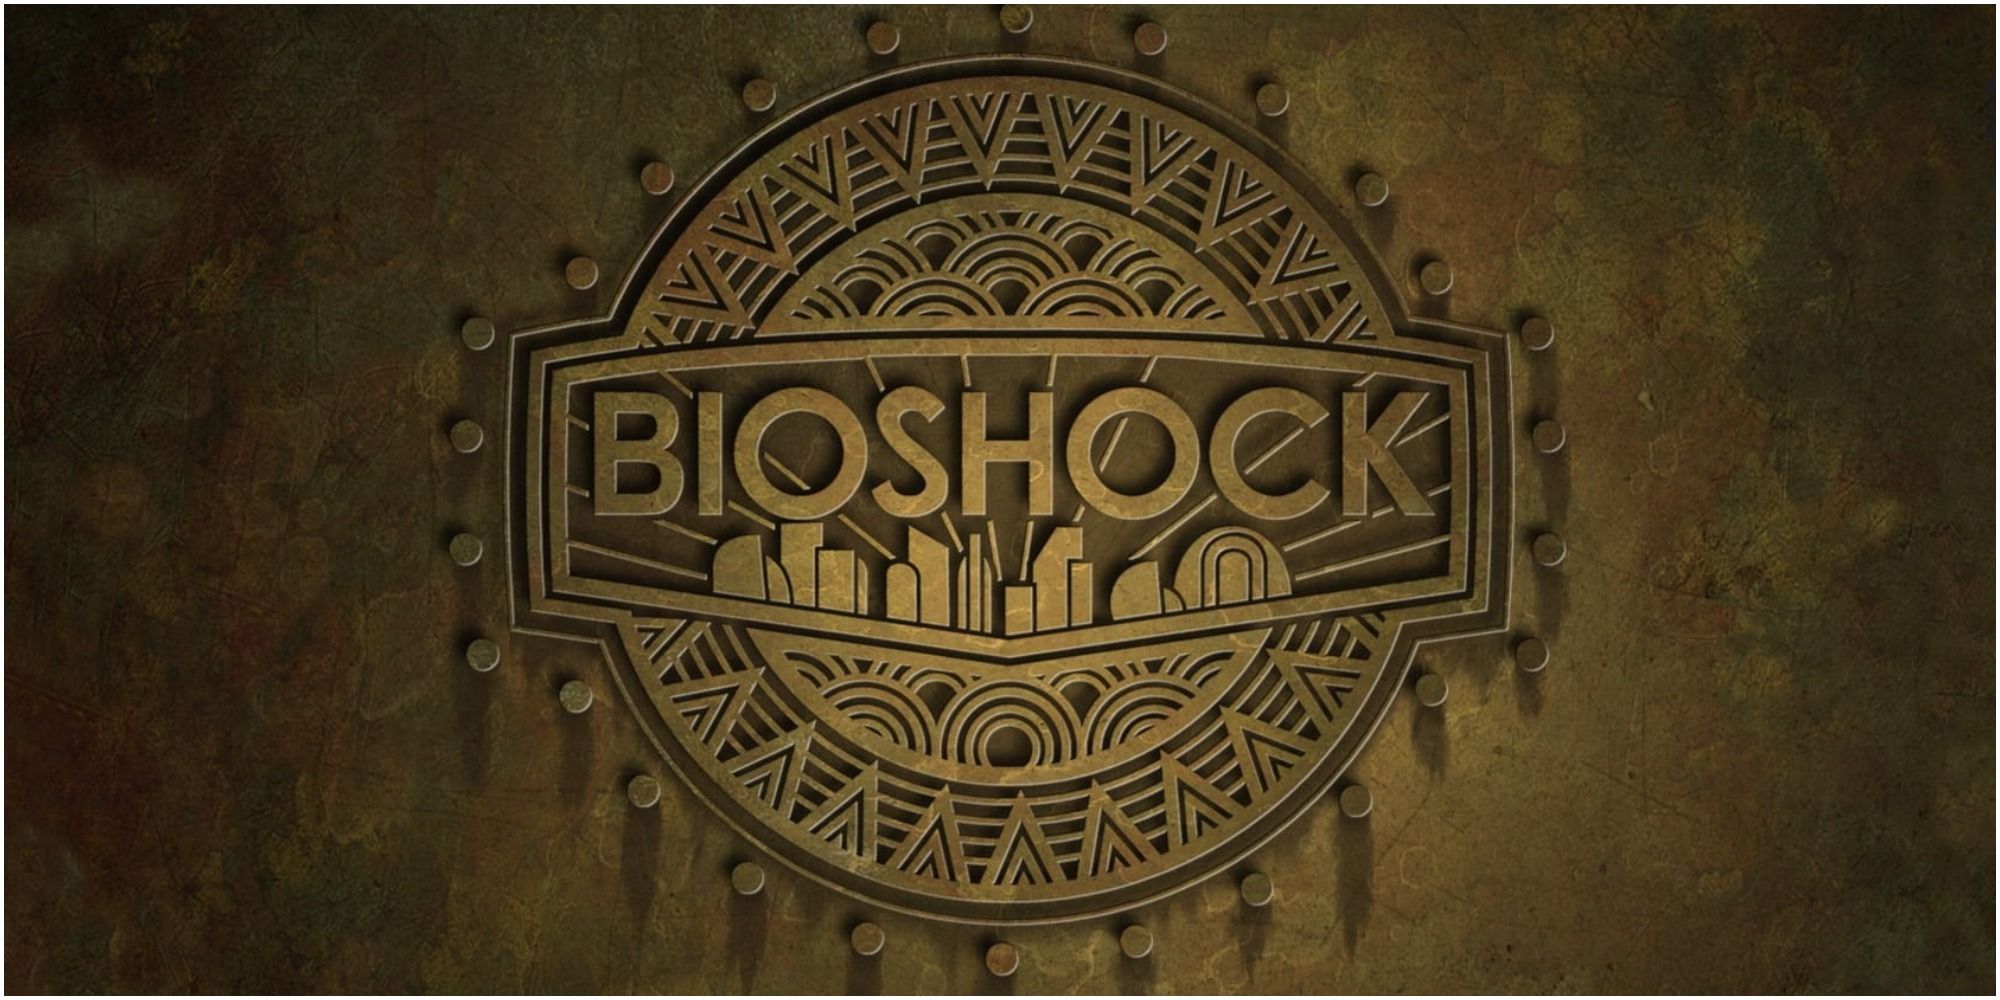 The Bioshock logo